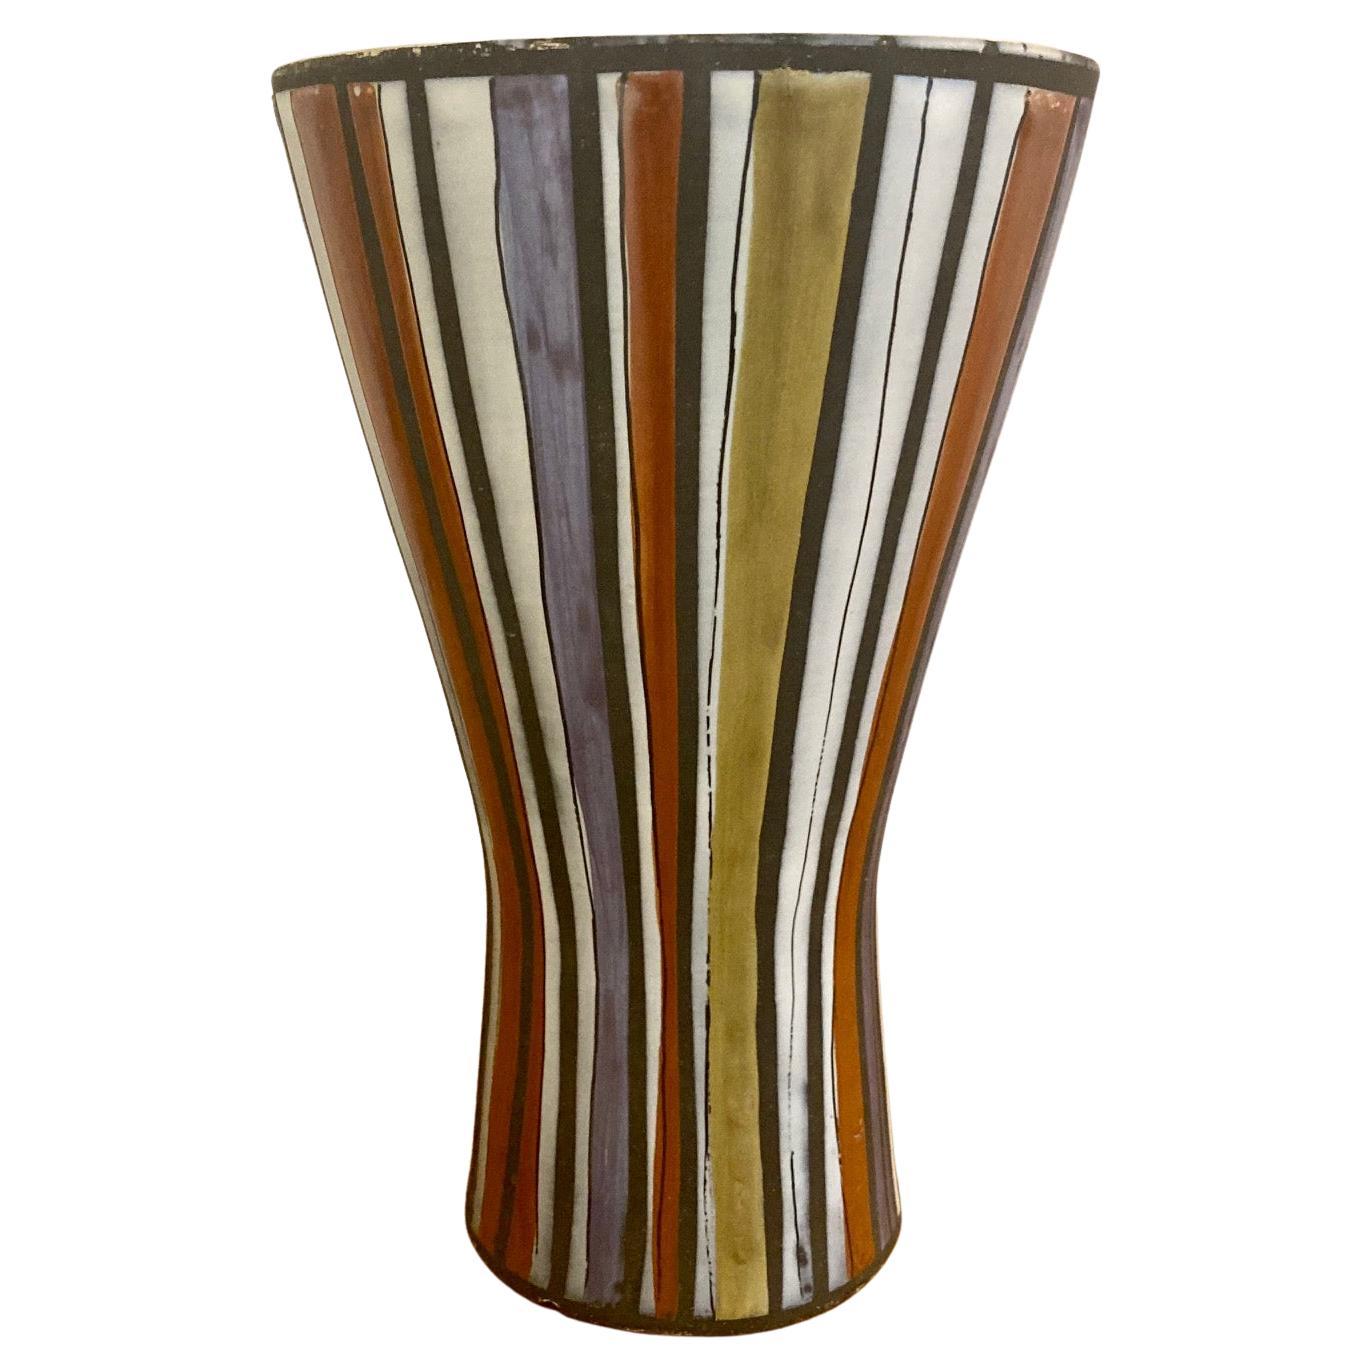 Ceramic "Diabolo" Vase by Roger Capron, Vallauris